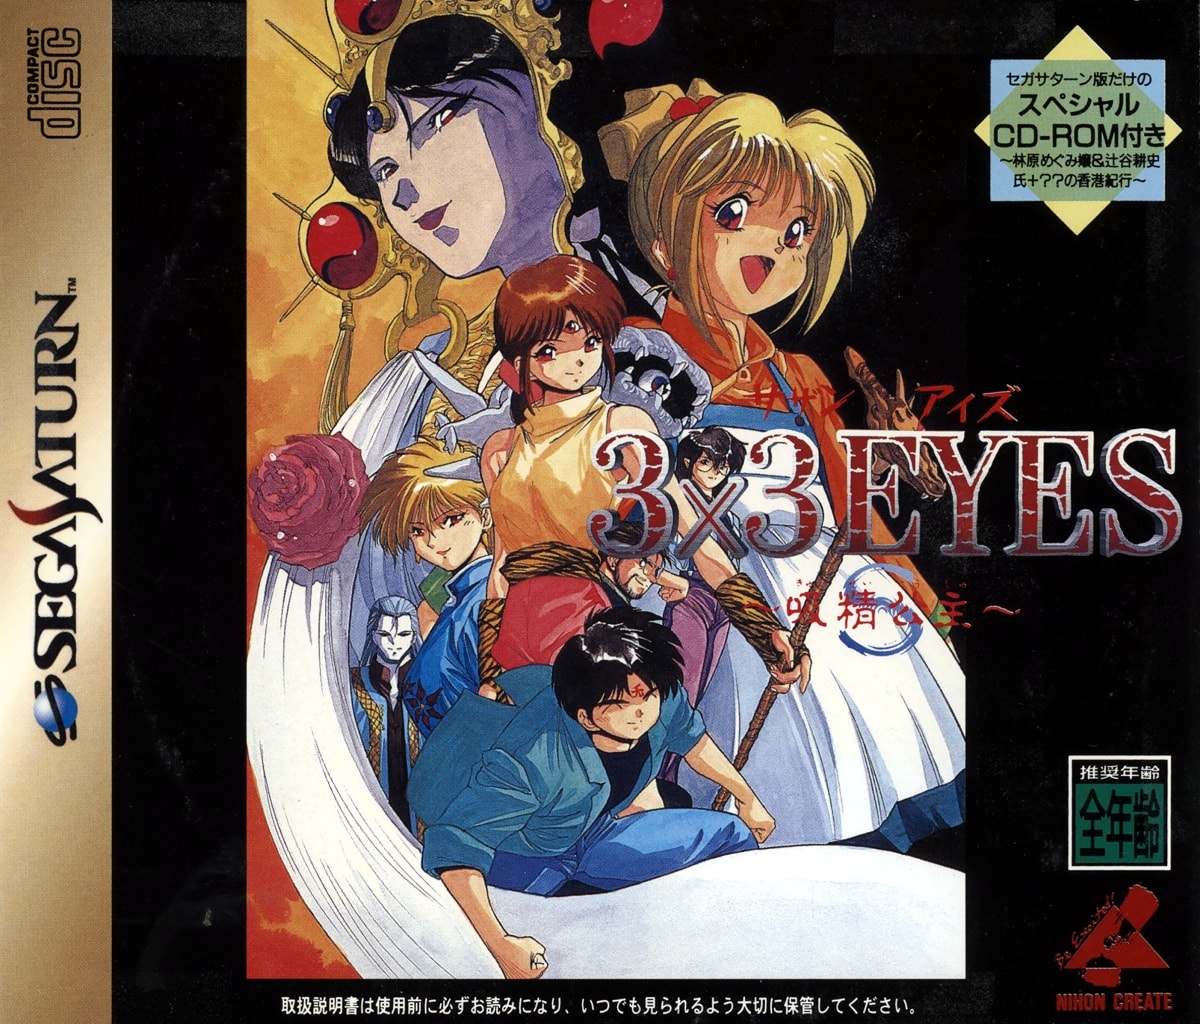 Capa do jogo 3x3 Eyes: Kyuusei Koushu S